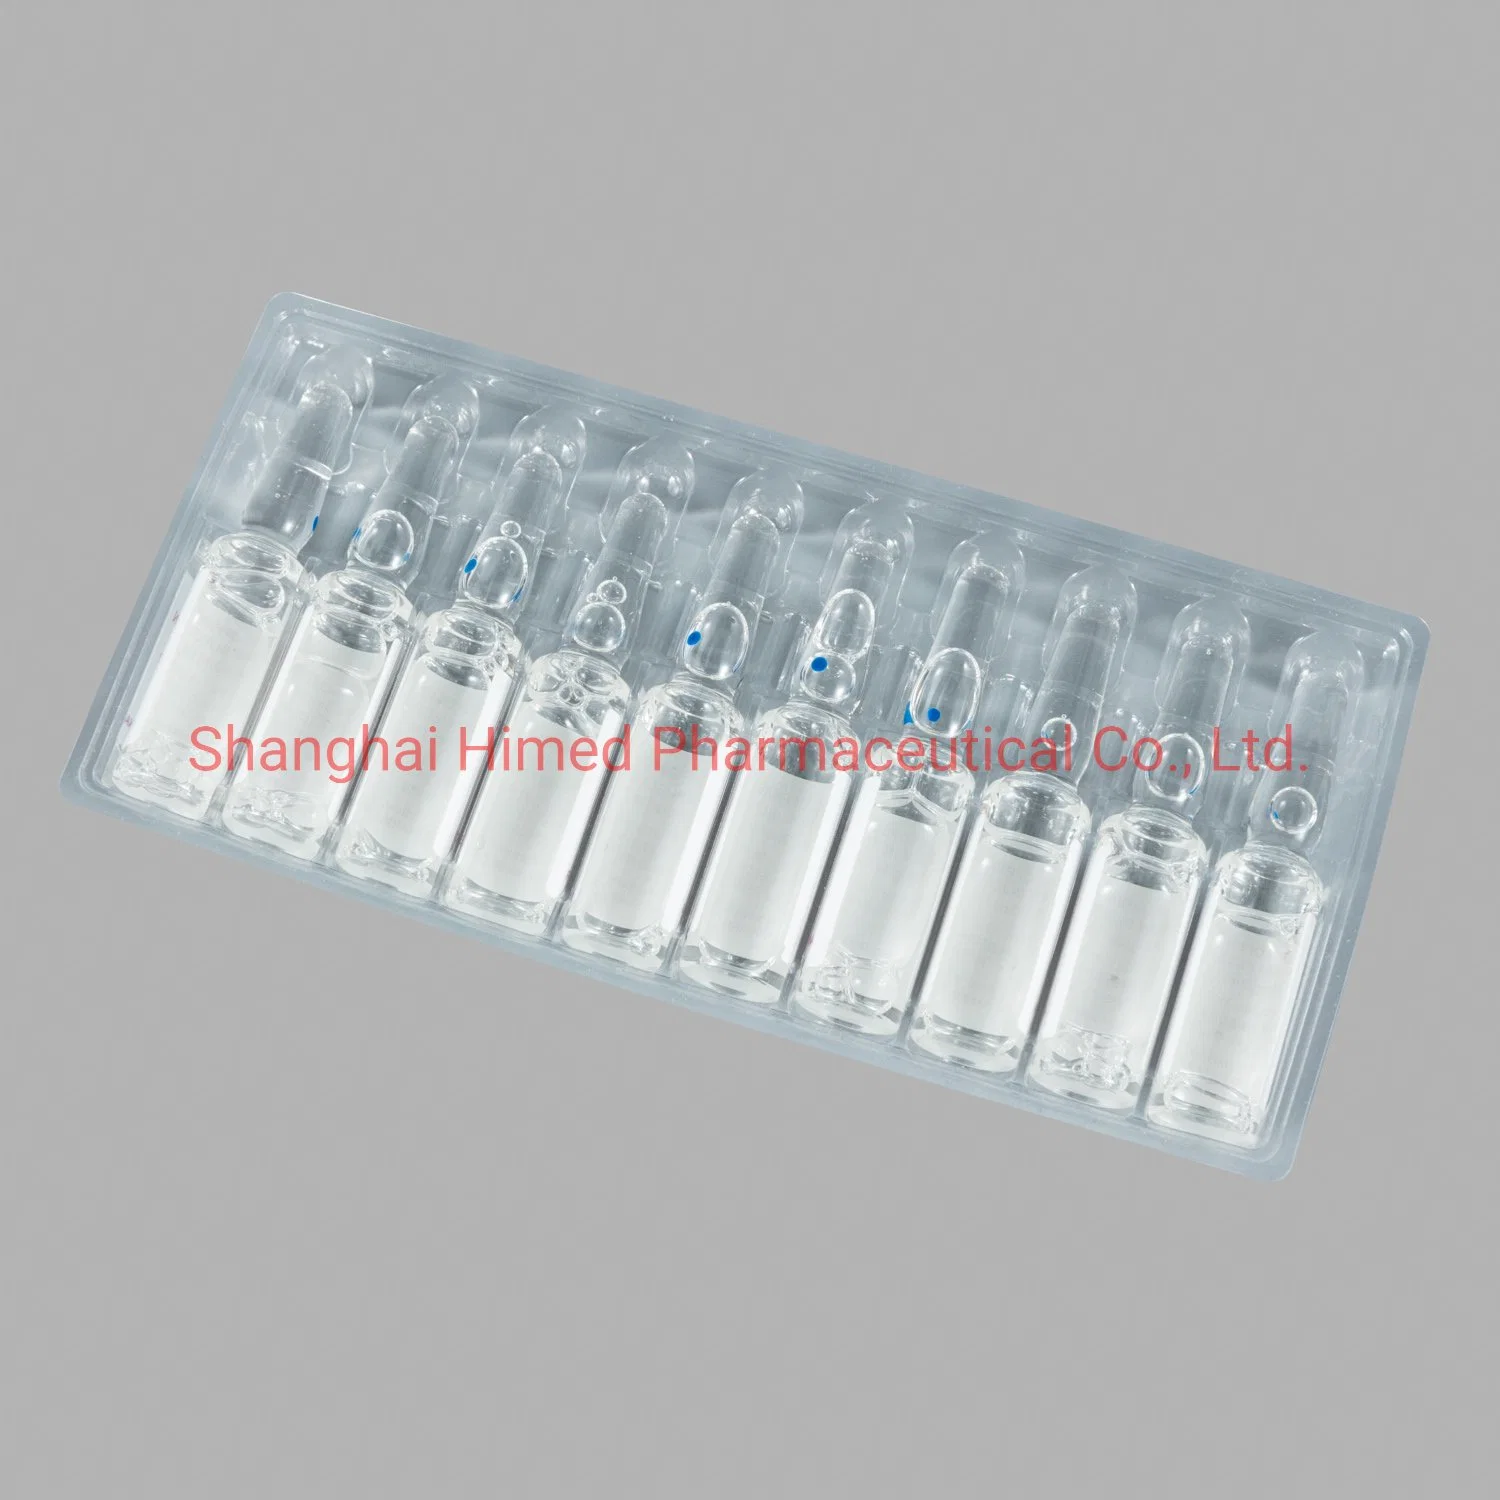 Lidocaína Hydrochloride Injection Pharmaceutical Product 2ml: 4mg, 2ml: 150mg, 5ml: 50mg 1%, 10ml: 0.2g